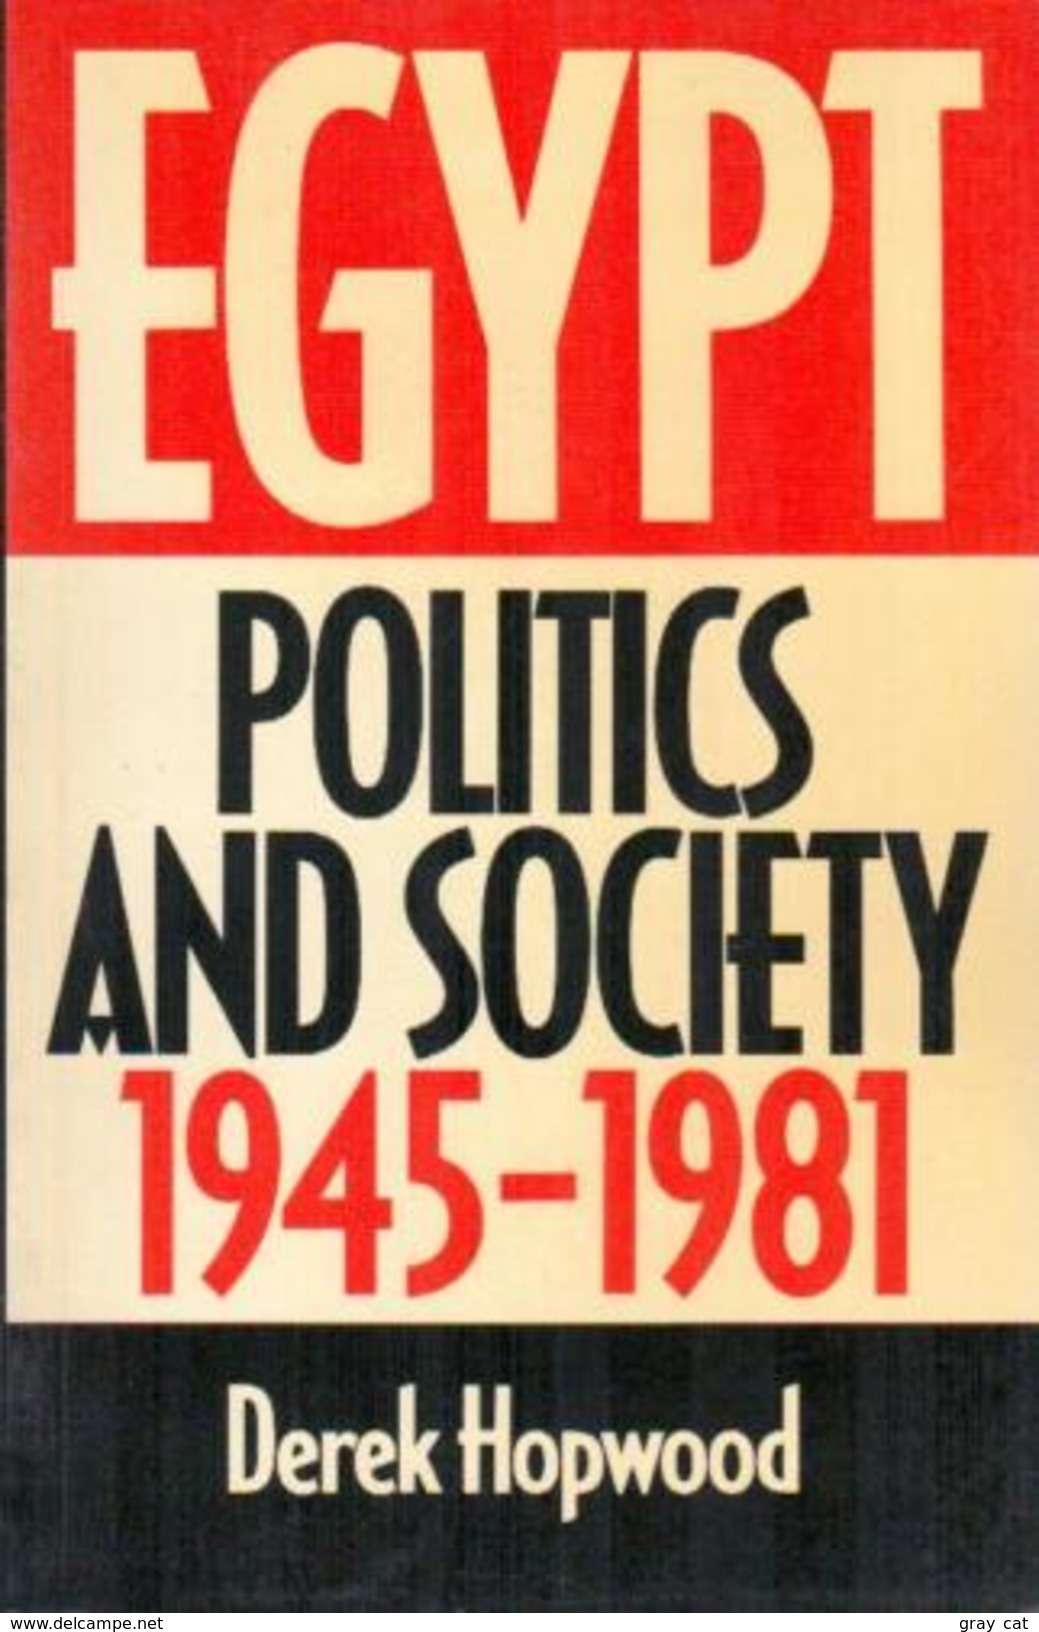 Egypt: Politics And Society 1945-1981 By Derek Hopwood (ISBN 9780049560123) - Moyen Orient